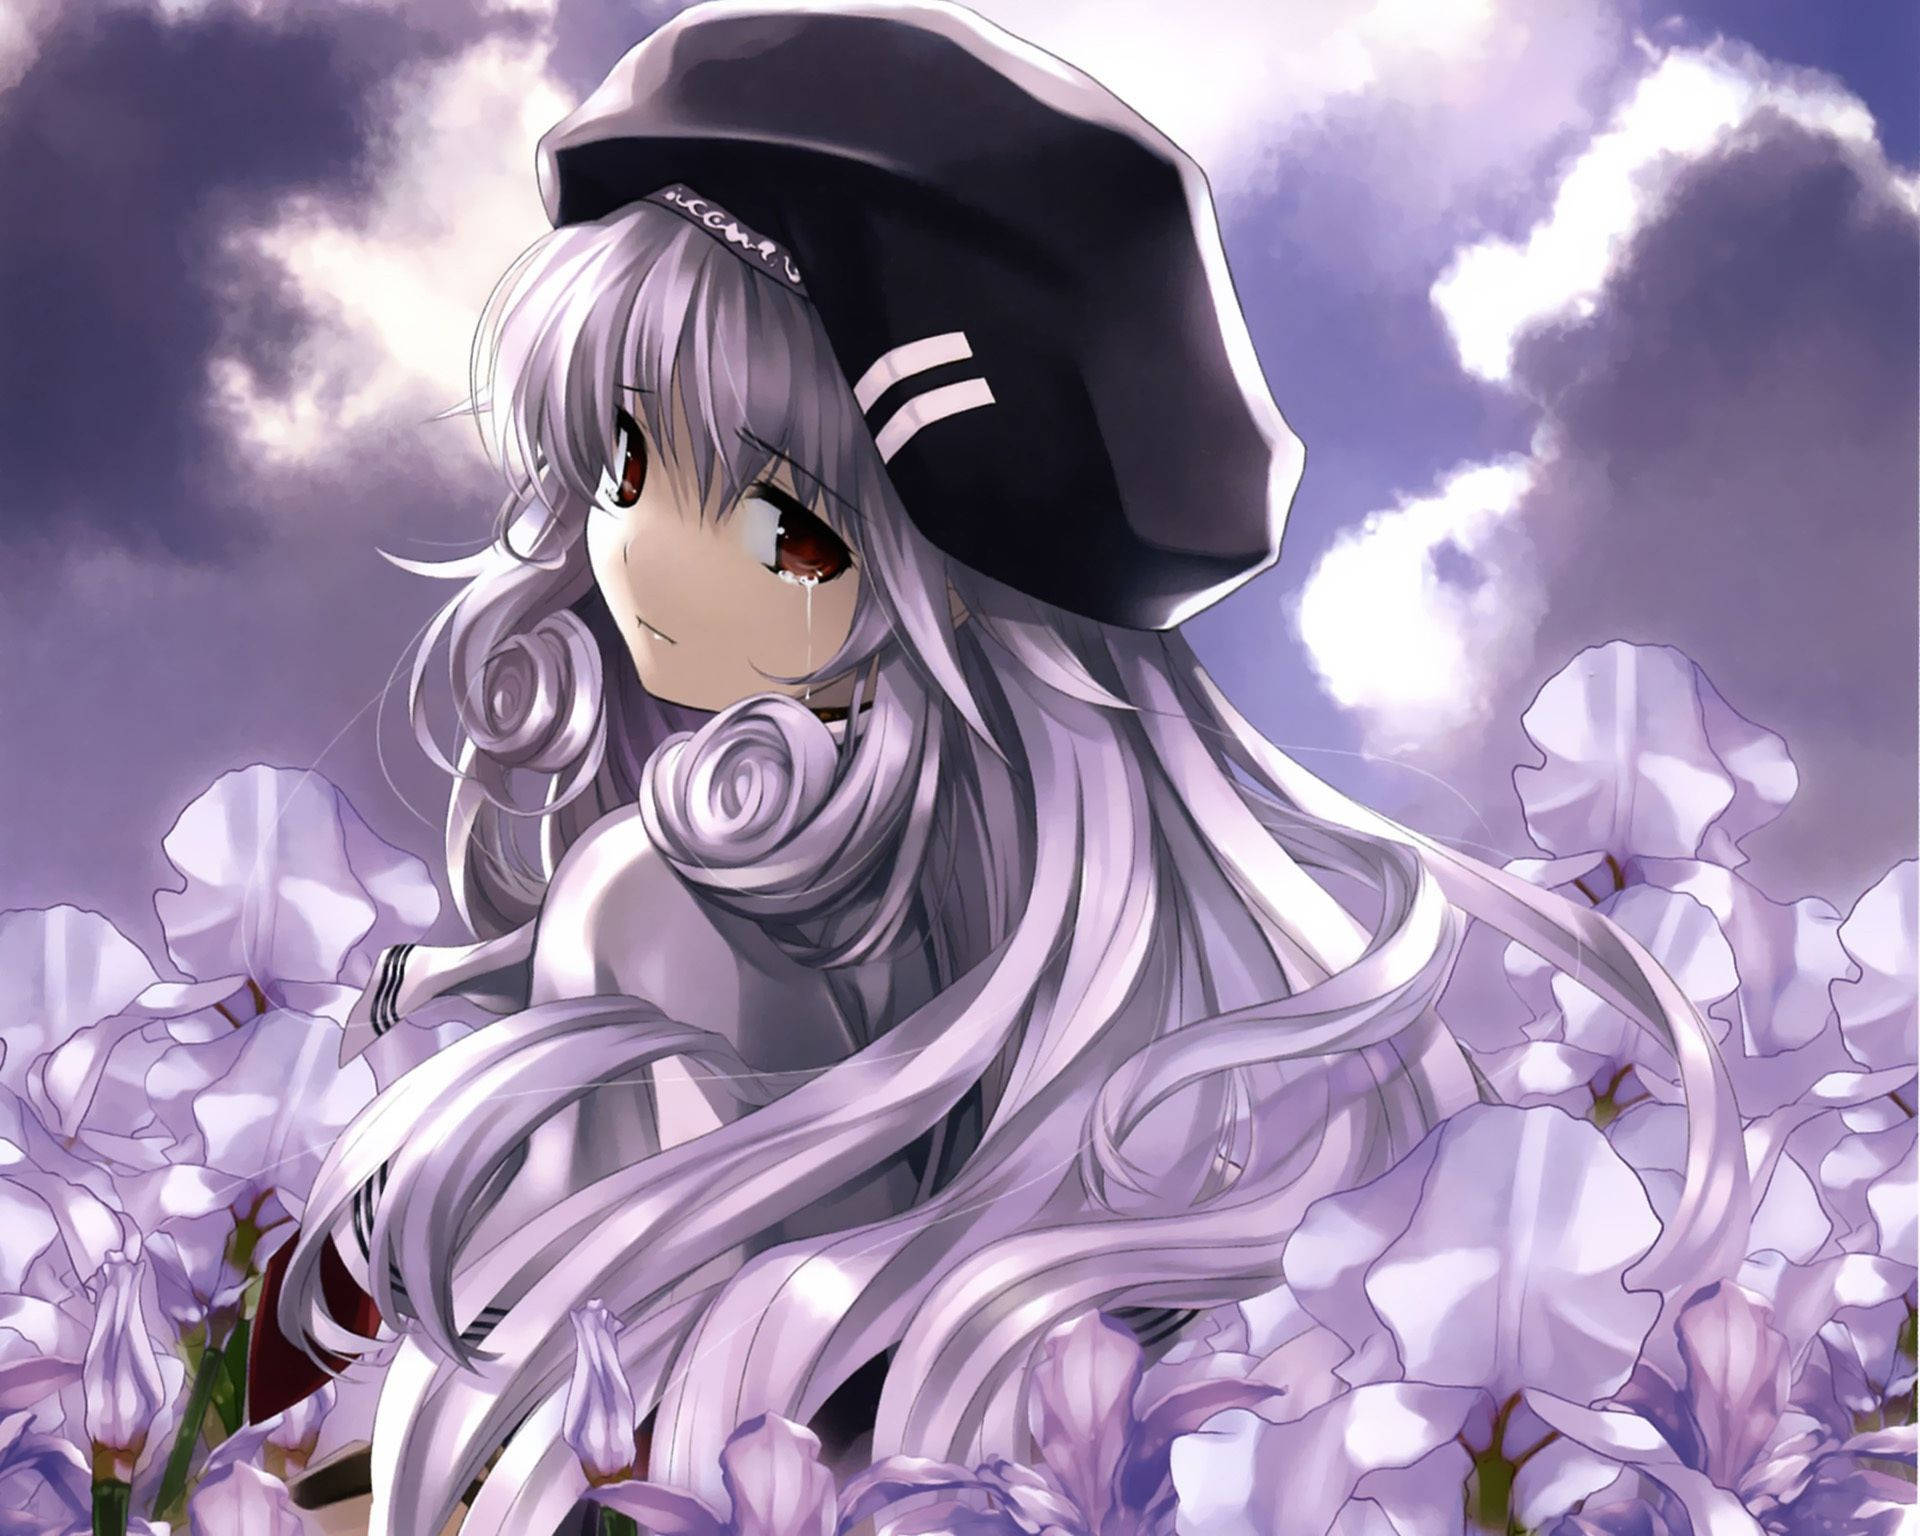 Sad Anime Girl In Flower Field Background